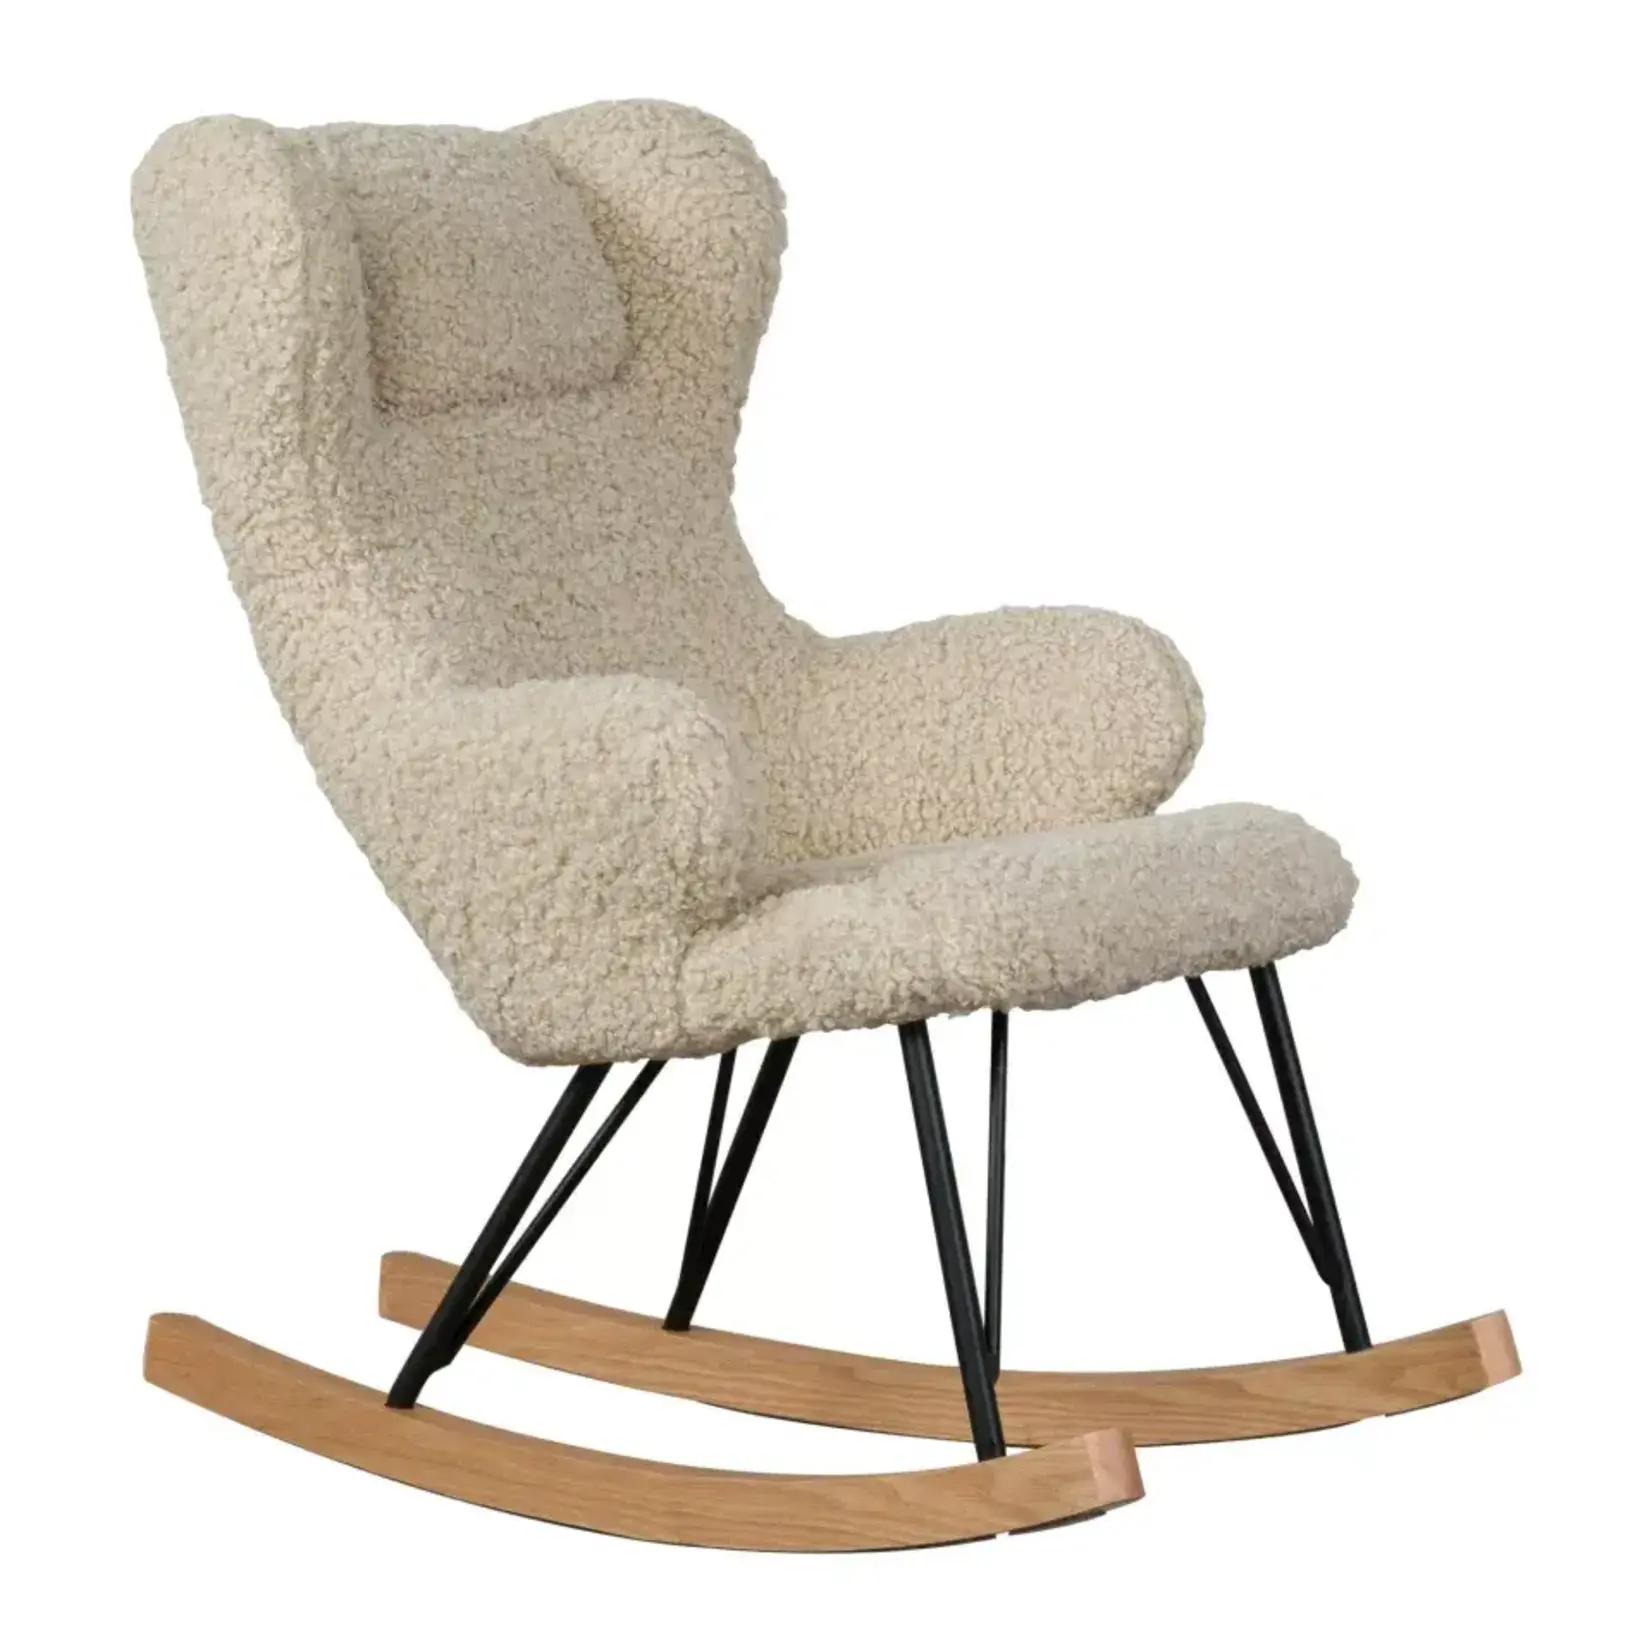 Quax Rocking Chair De Luxe - Kids - Sheep